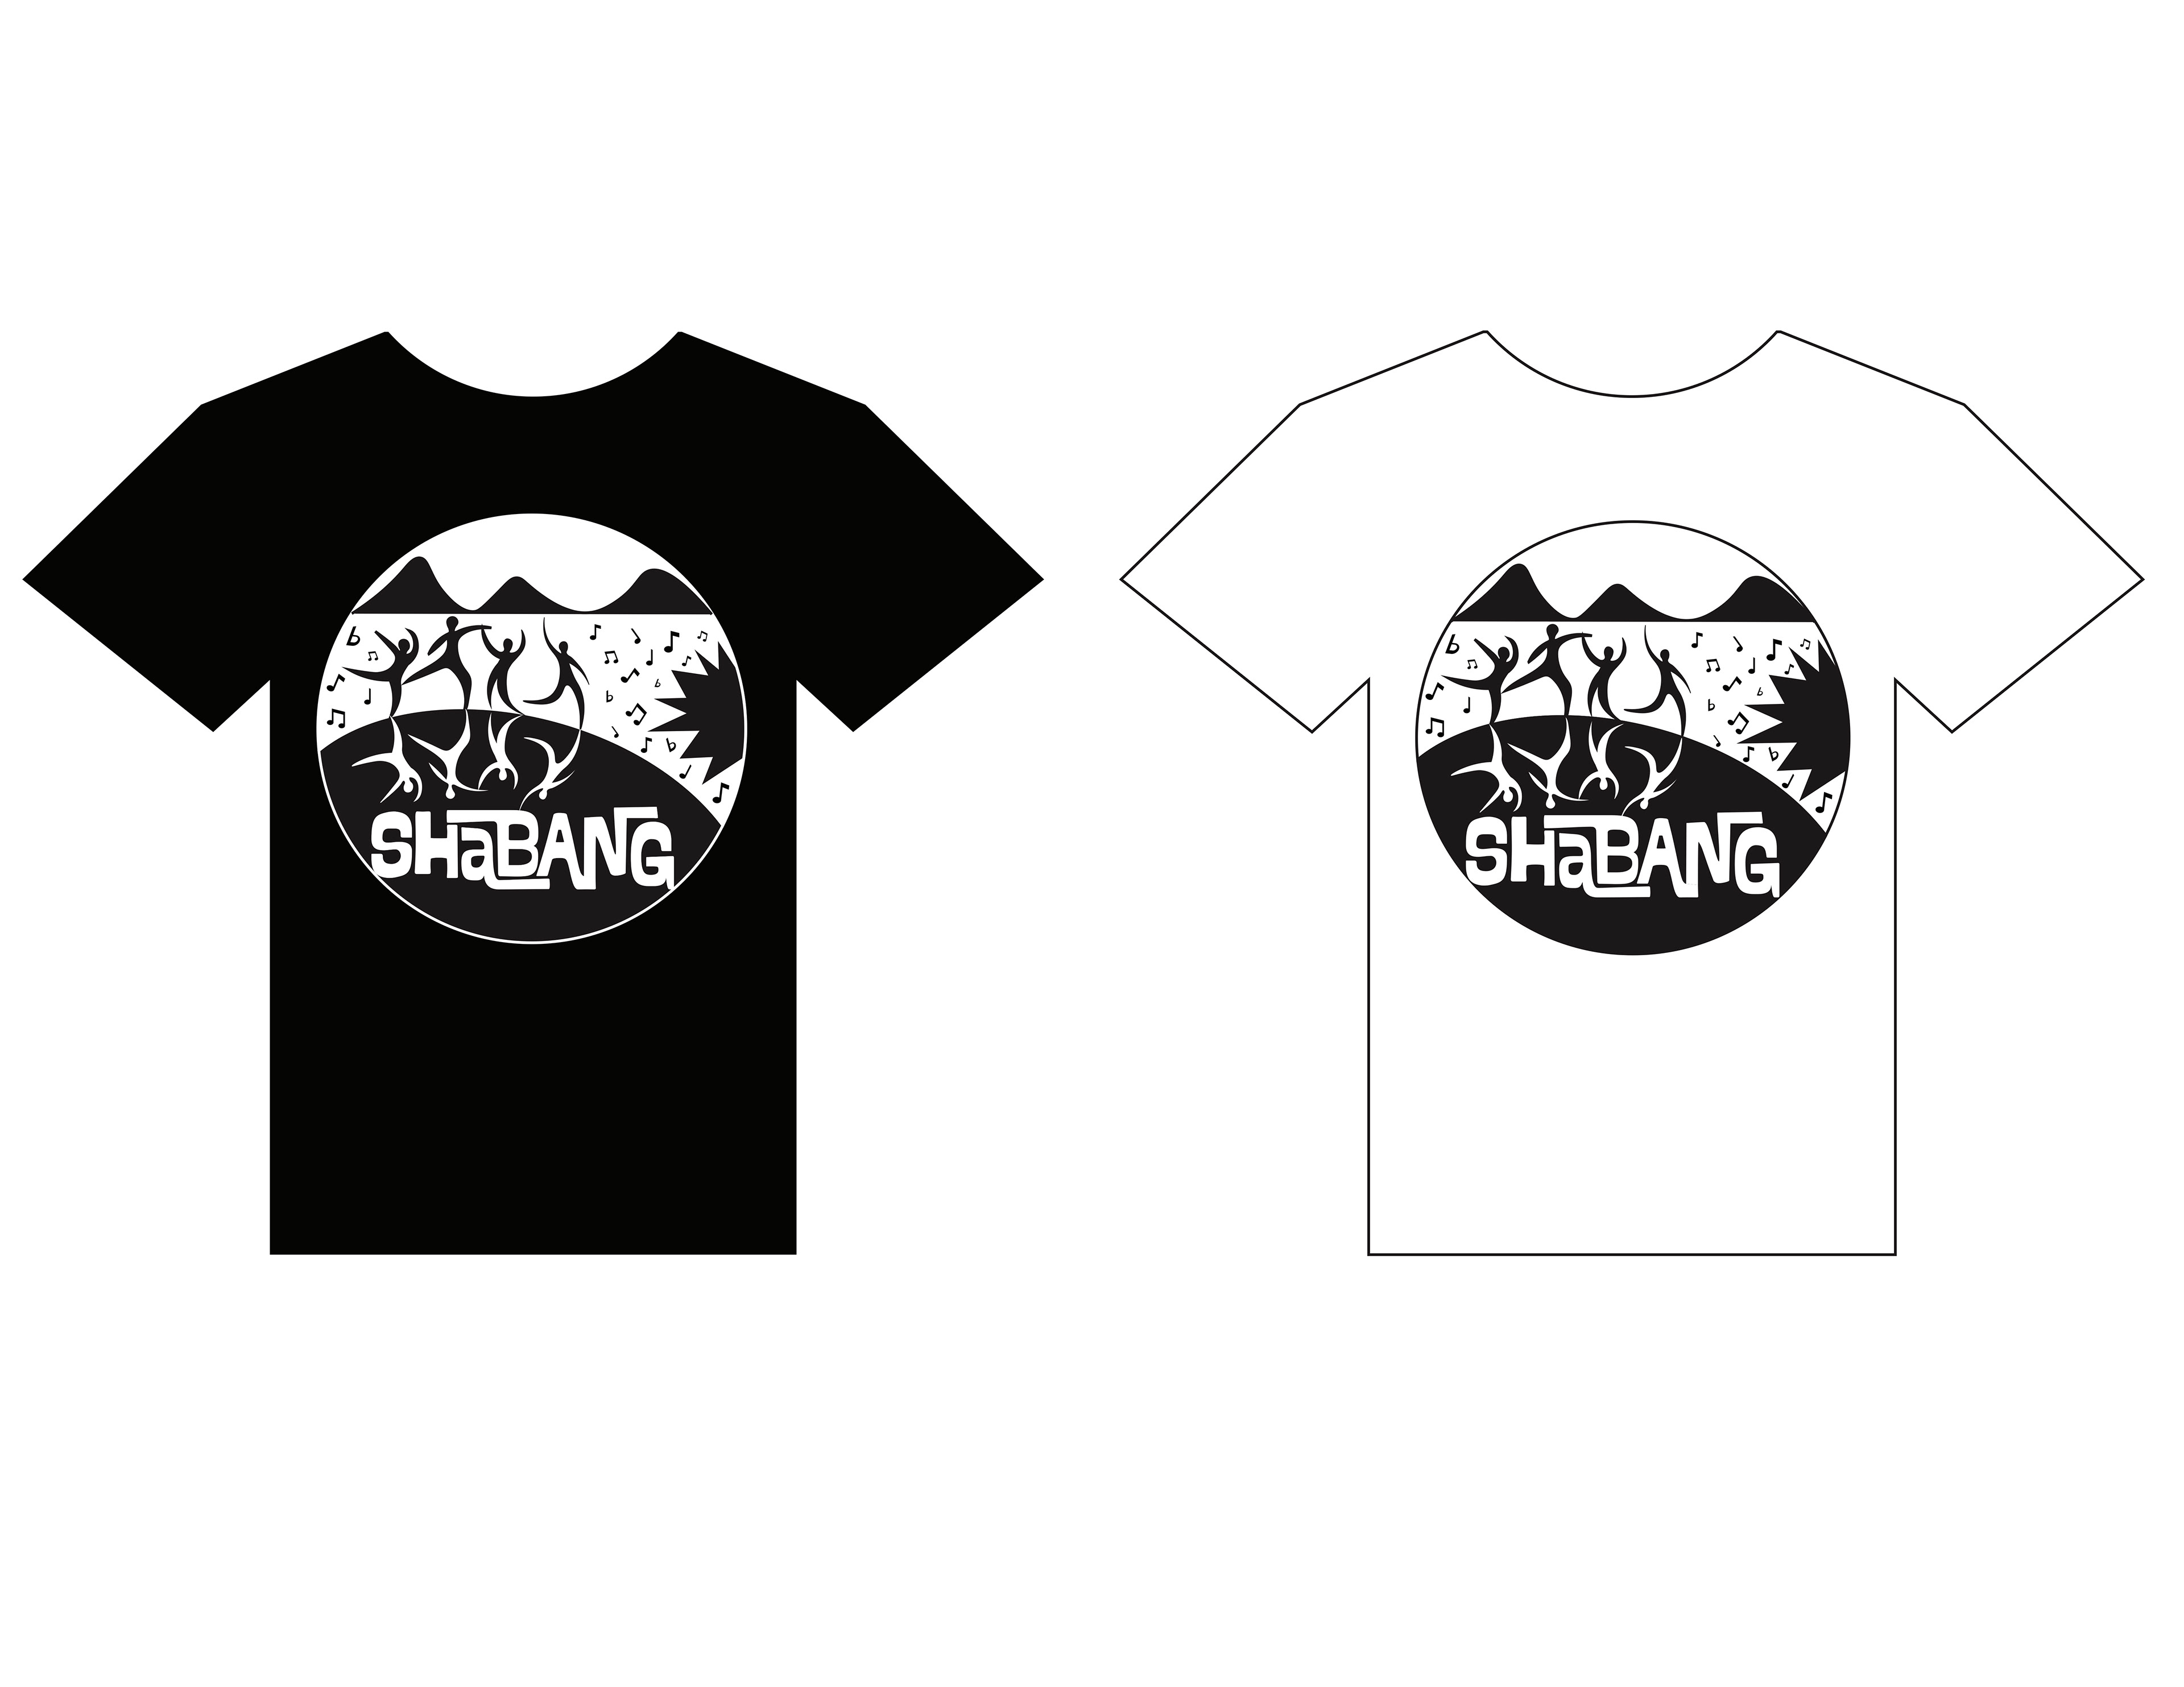 Rock band t-shirt design, T-shirt contest